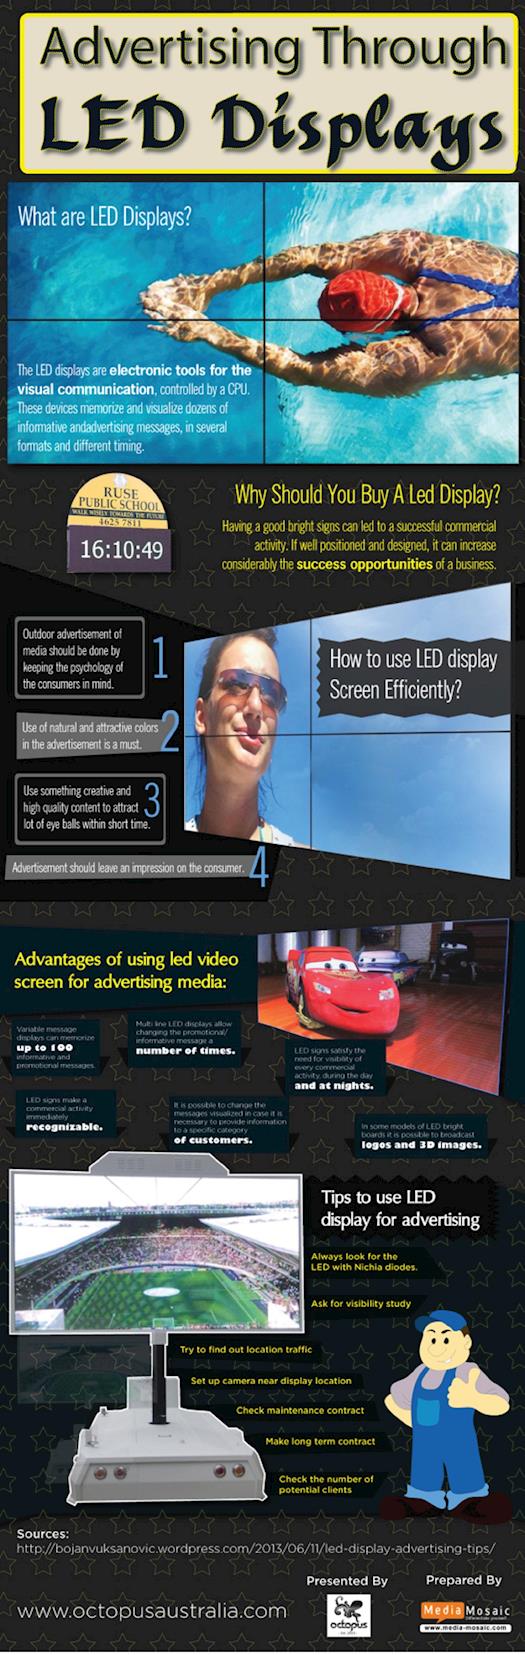 Advertising Through LED Displays [InfoGraphic]